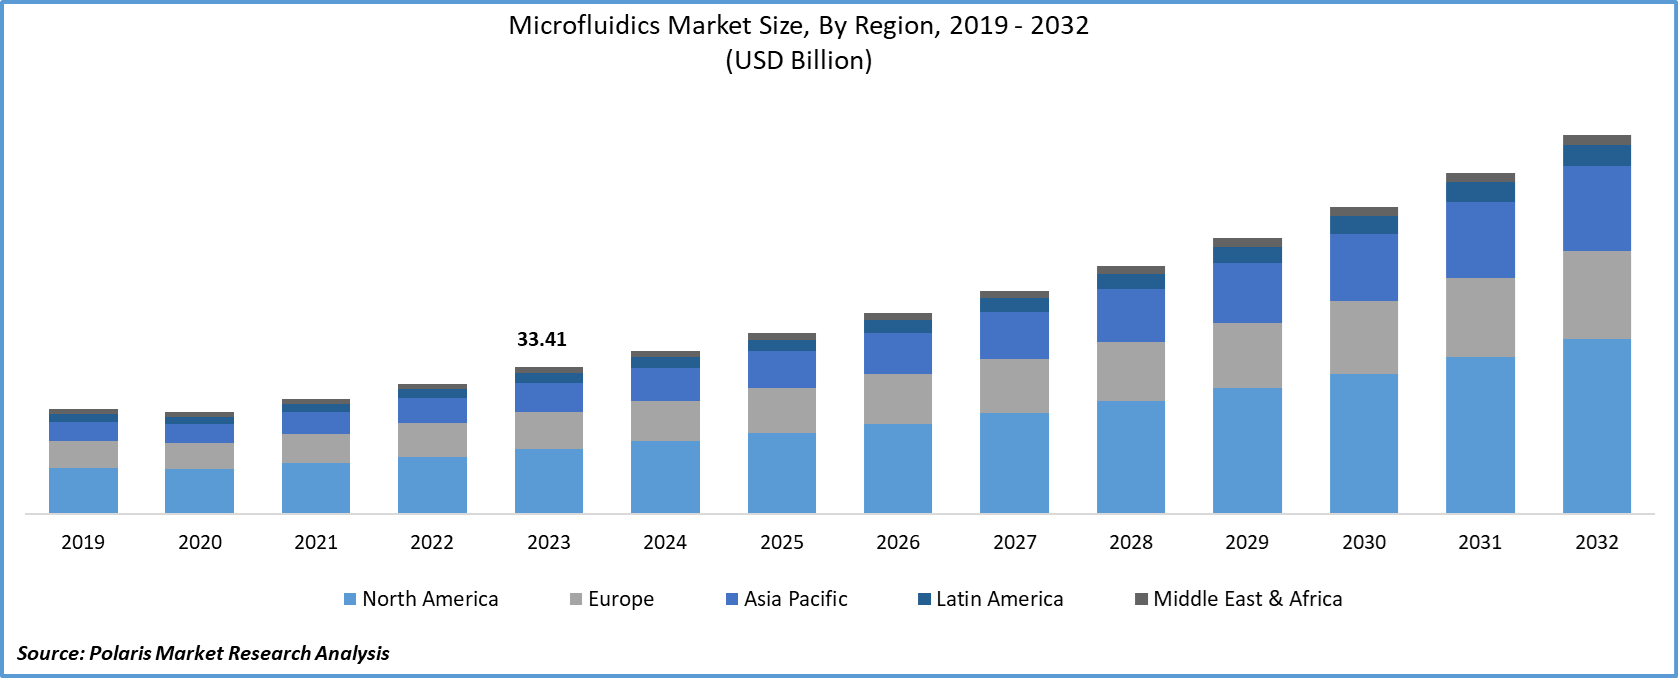 Microfluidics Market Size